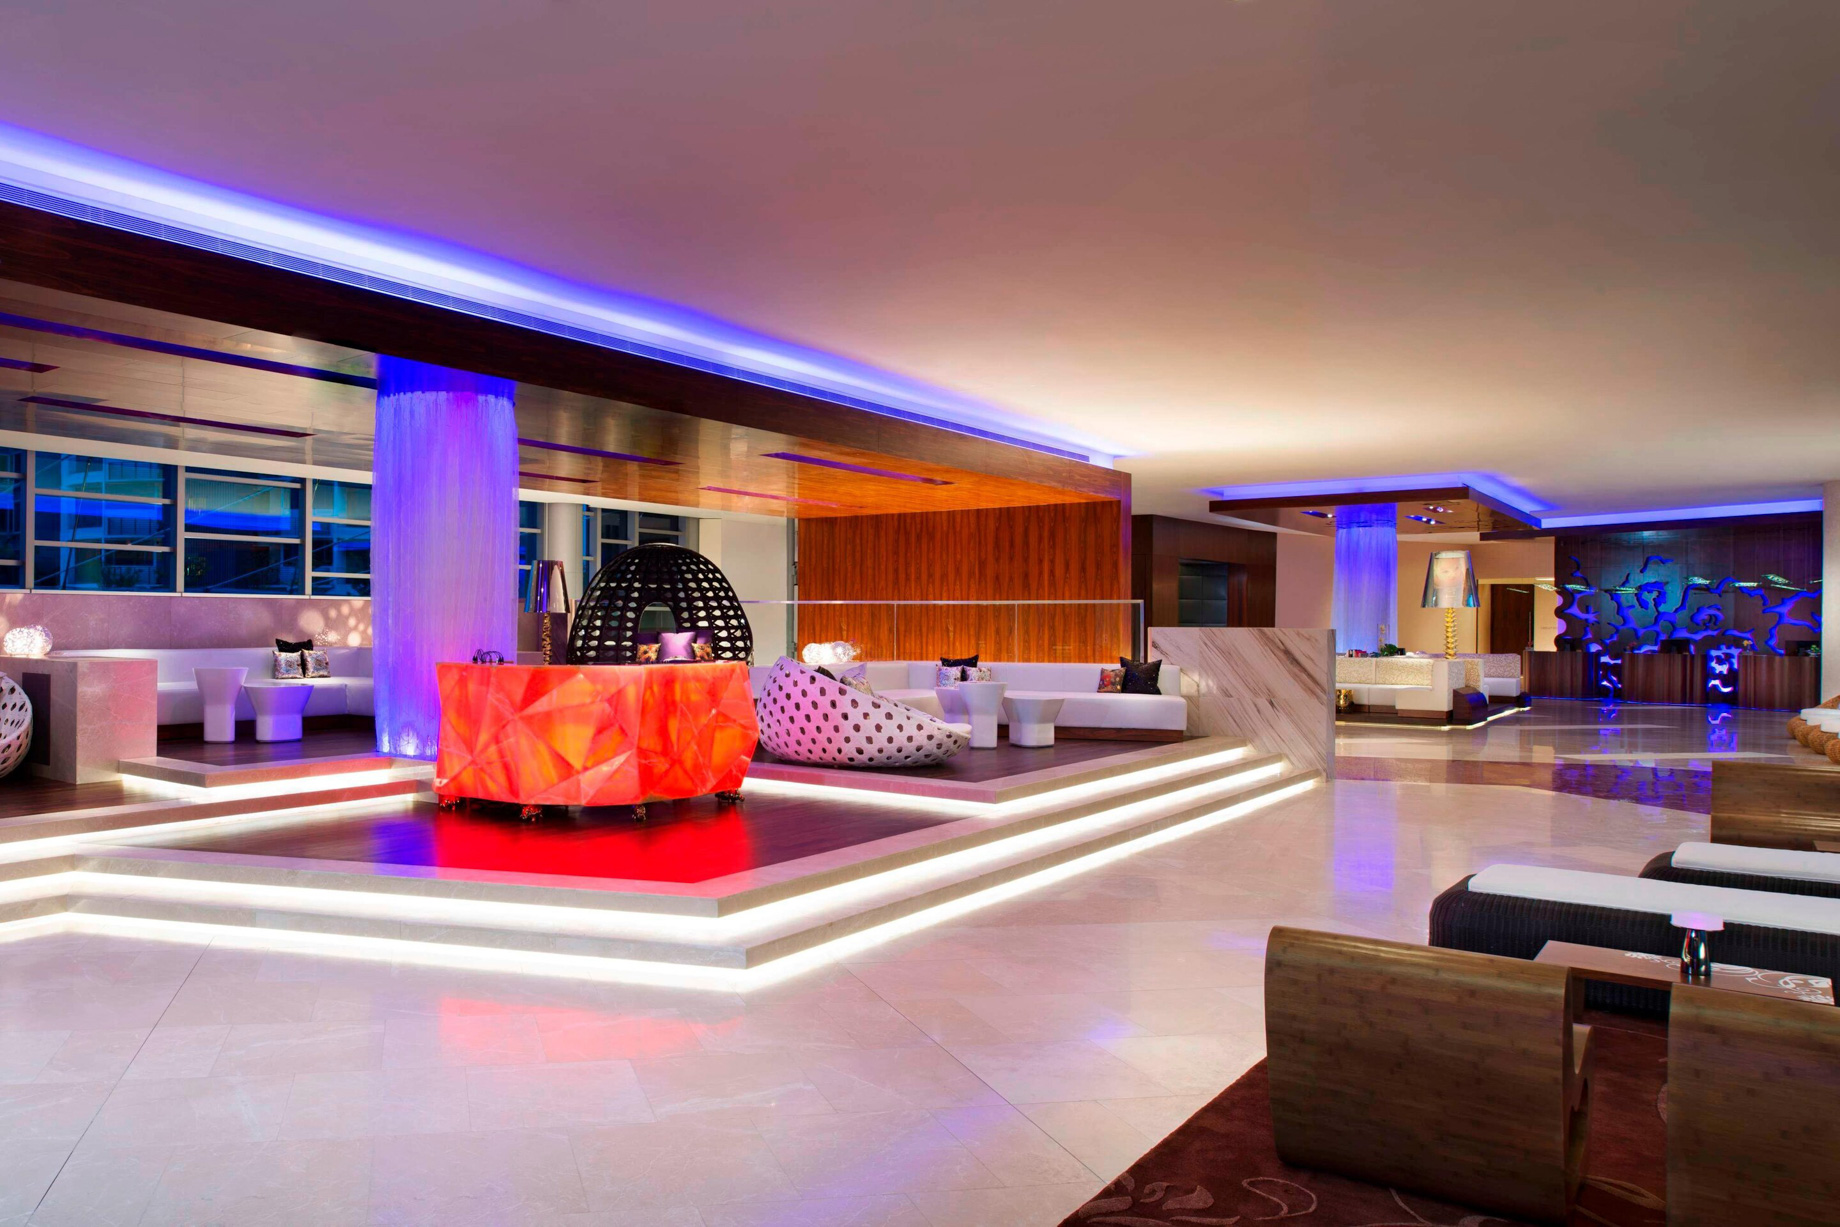 W Singapore Sentosa Cove Hotel – Singapore – W Lounge DJ Booth